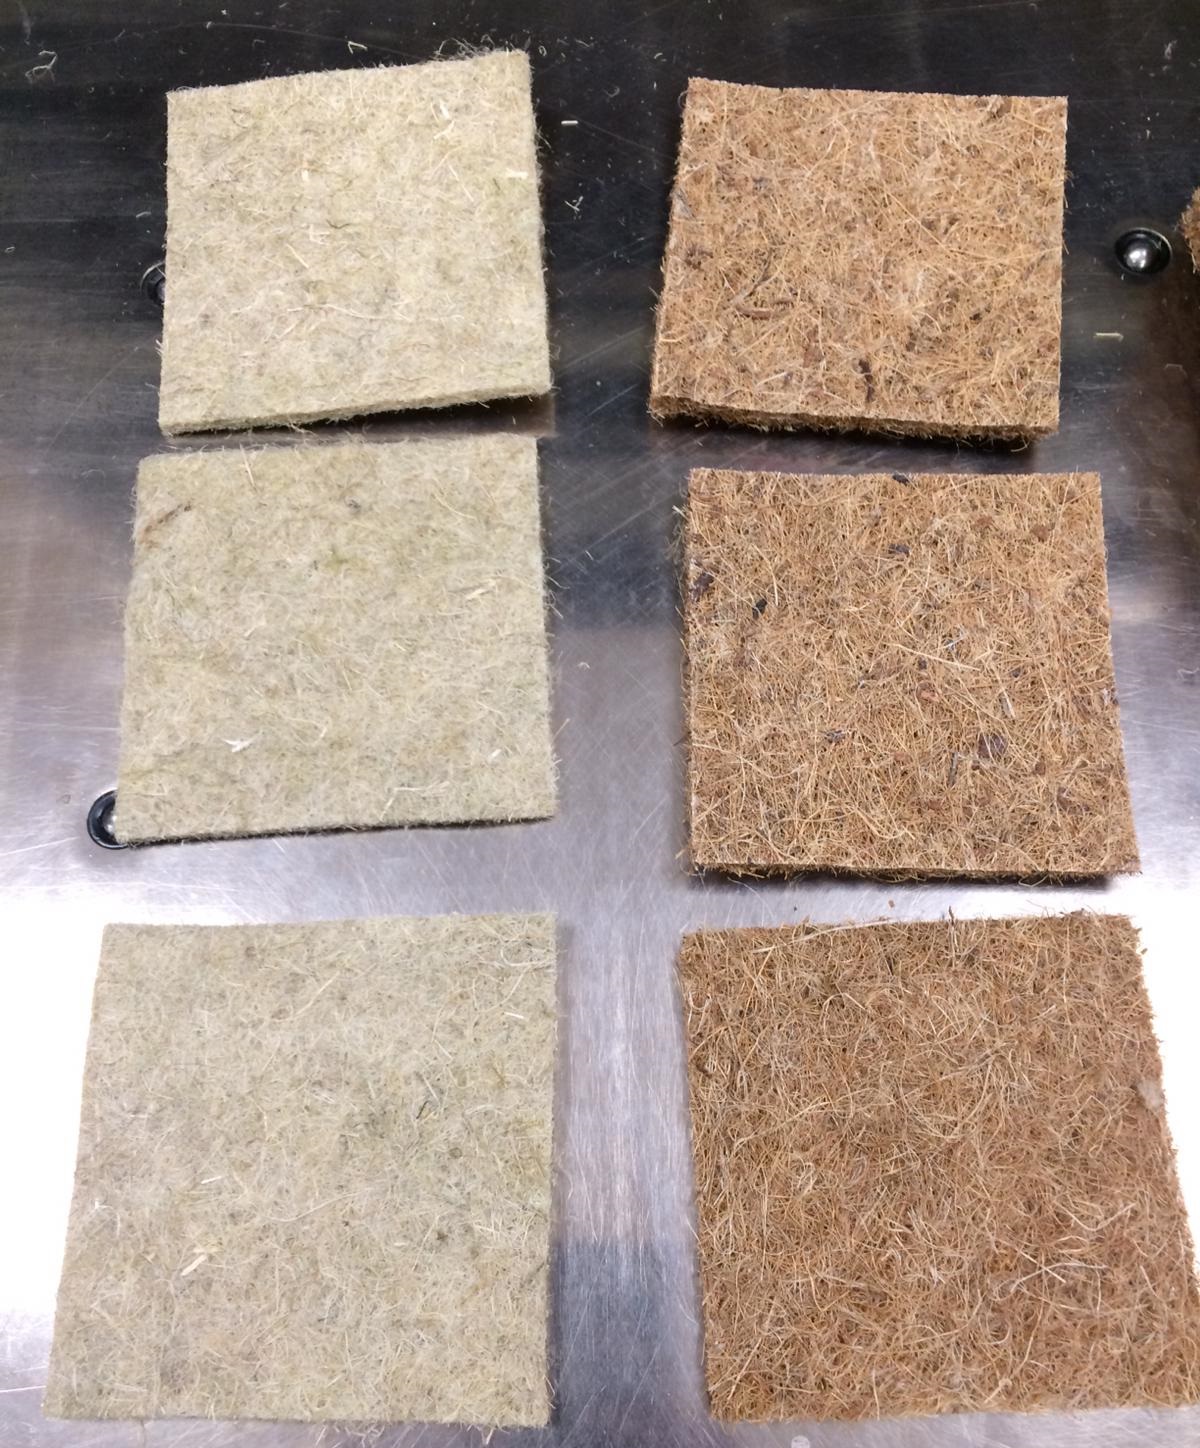 Squares of microgreen grow pads